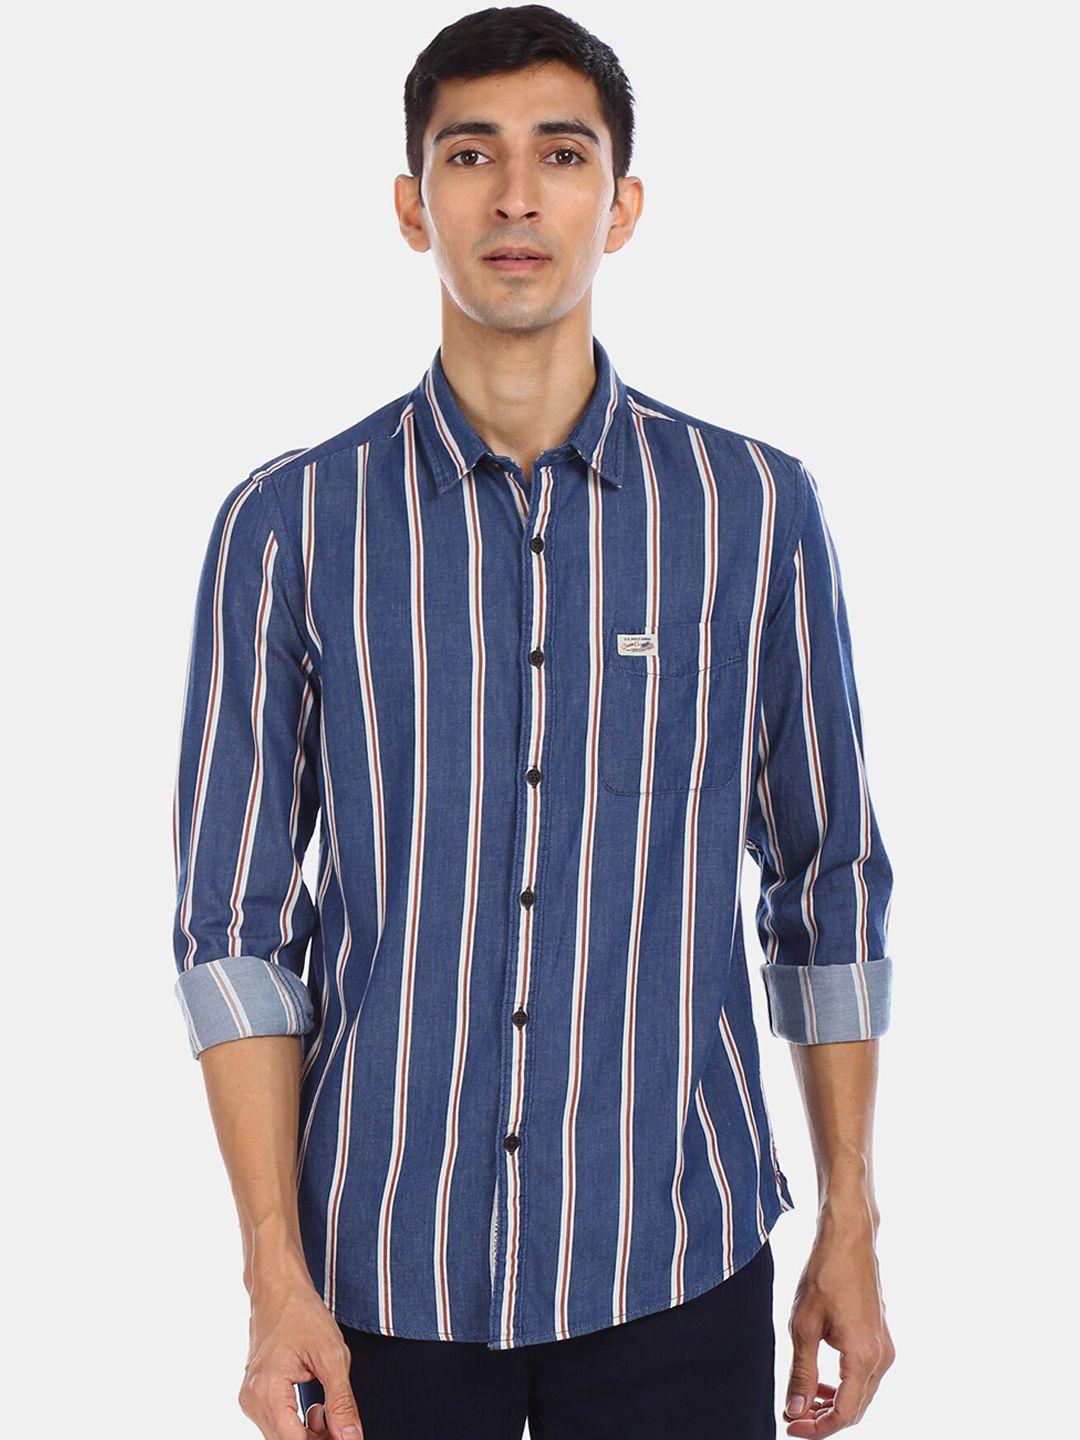 u.s. polo assn. denim co. men blue & off-white regular fit striped casual shirt